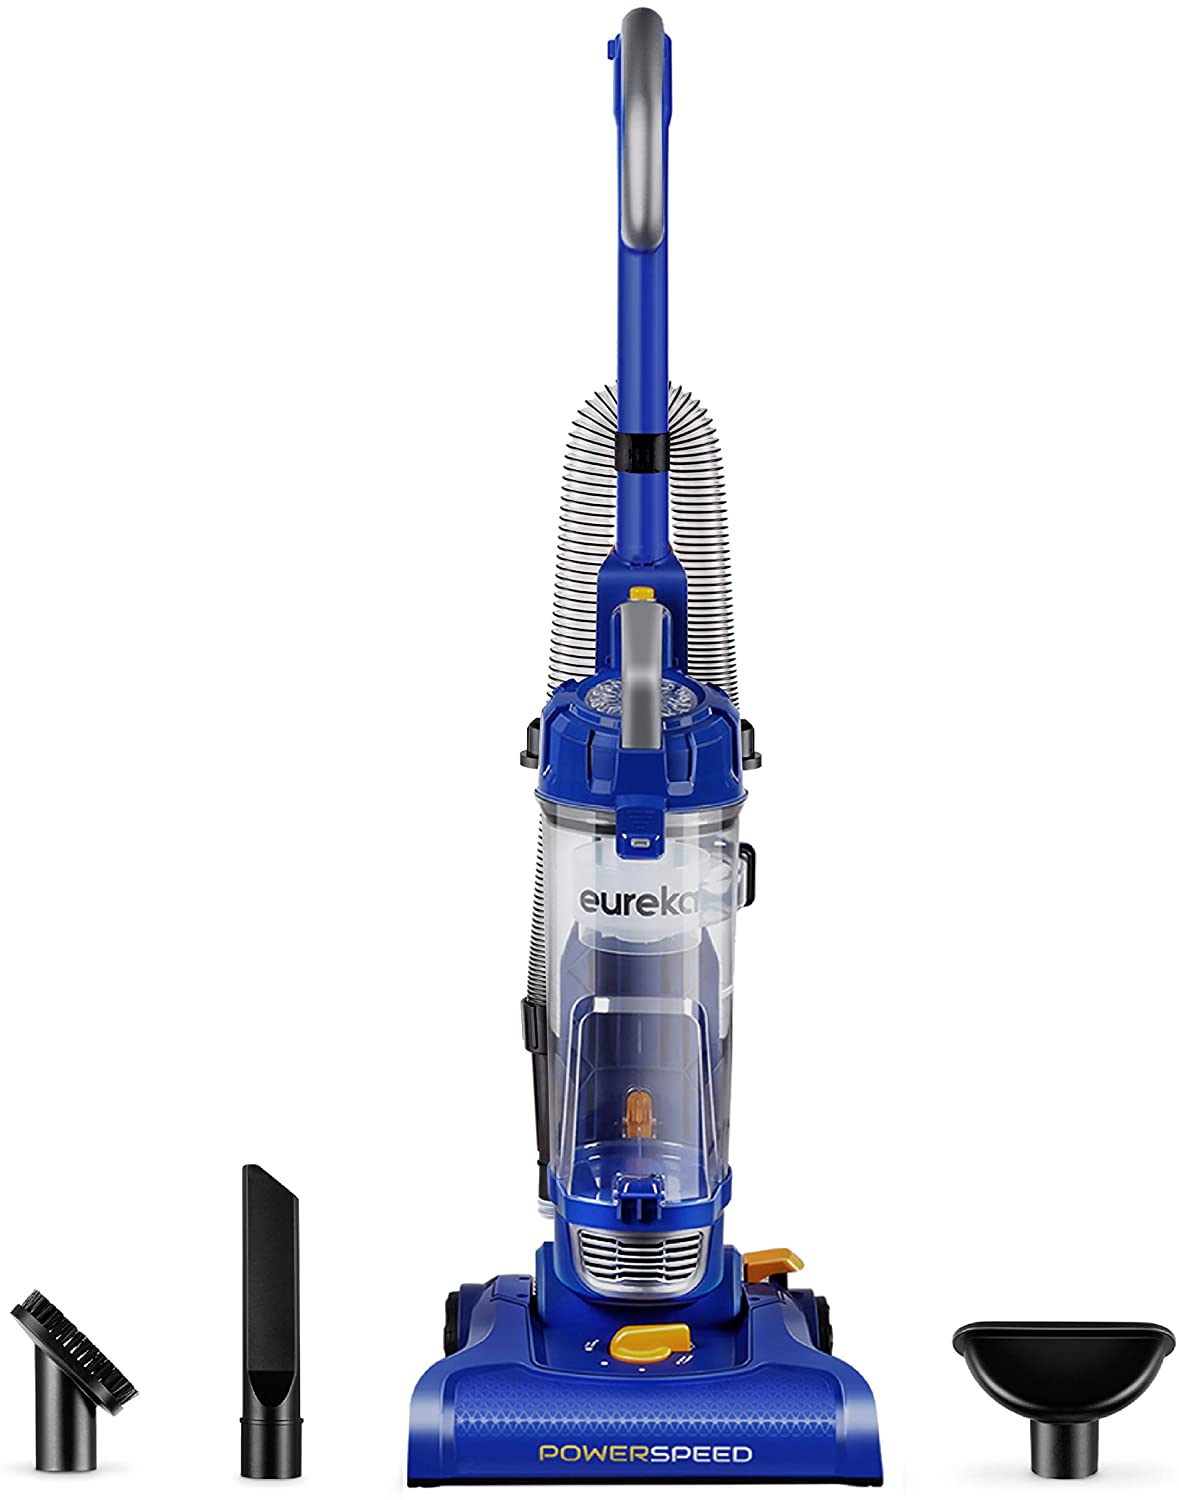 Eureka PowerSpeed NEU182A - Vacuum cleaner - upright - bagless - 960 W - image 1 of 3